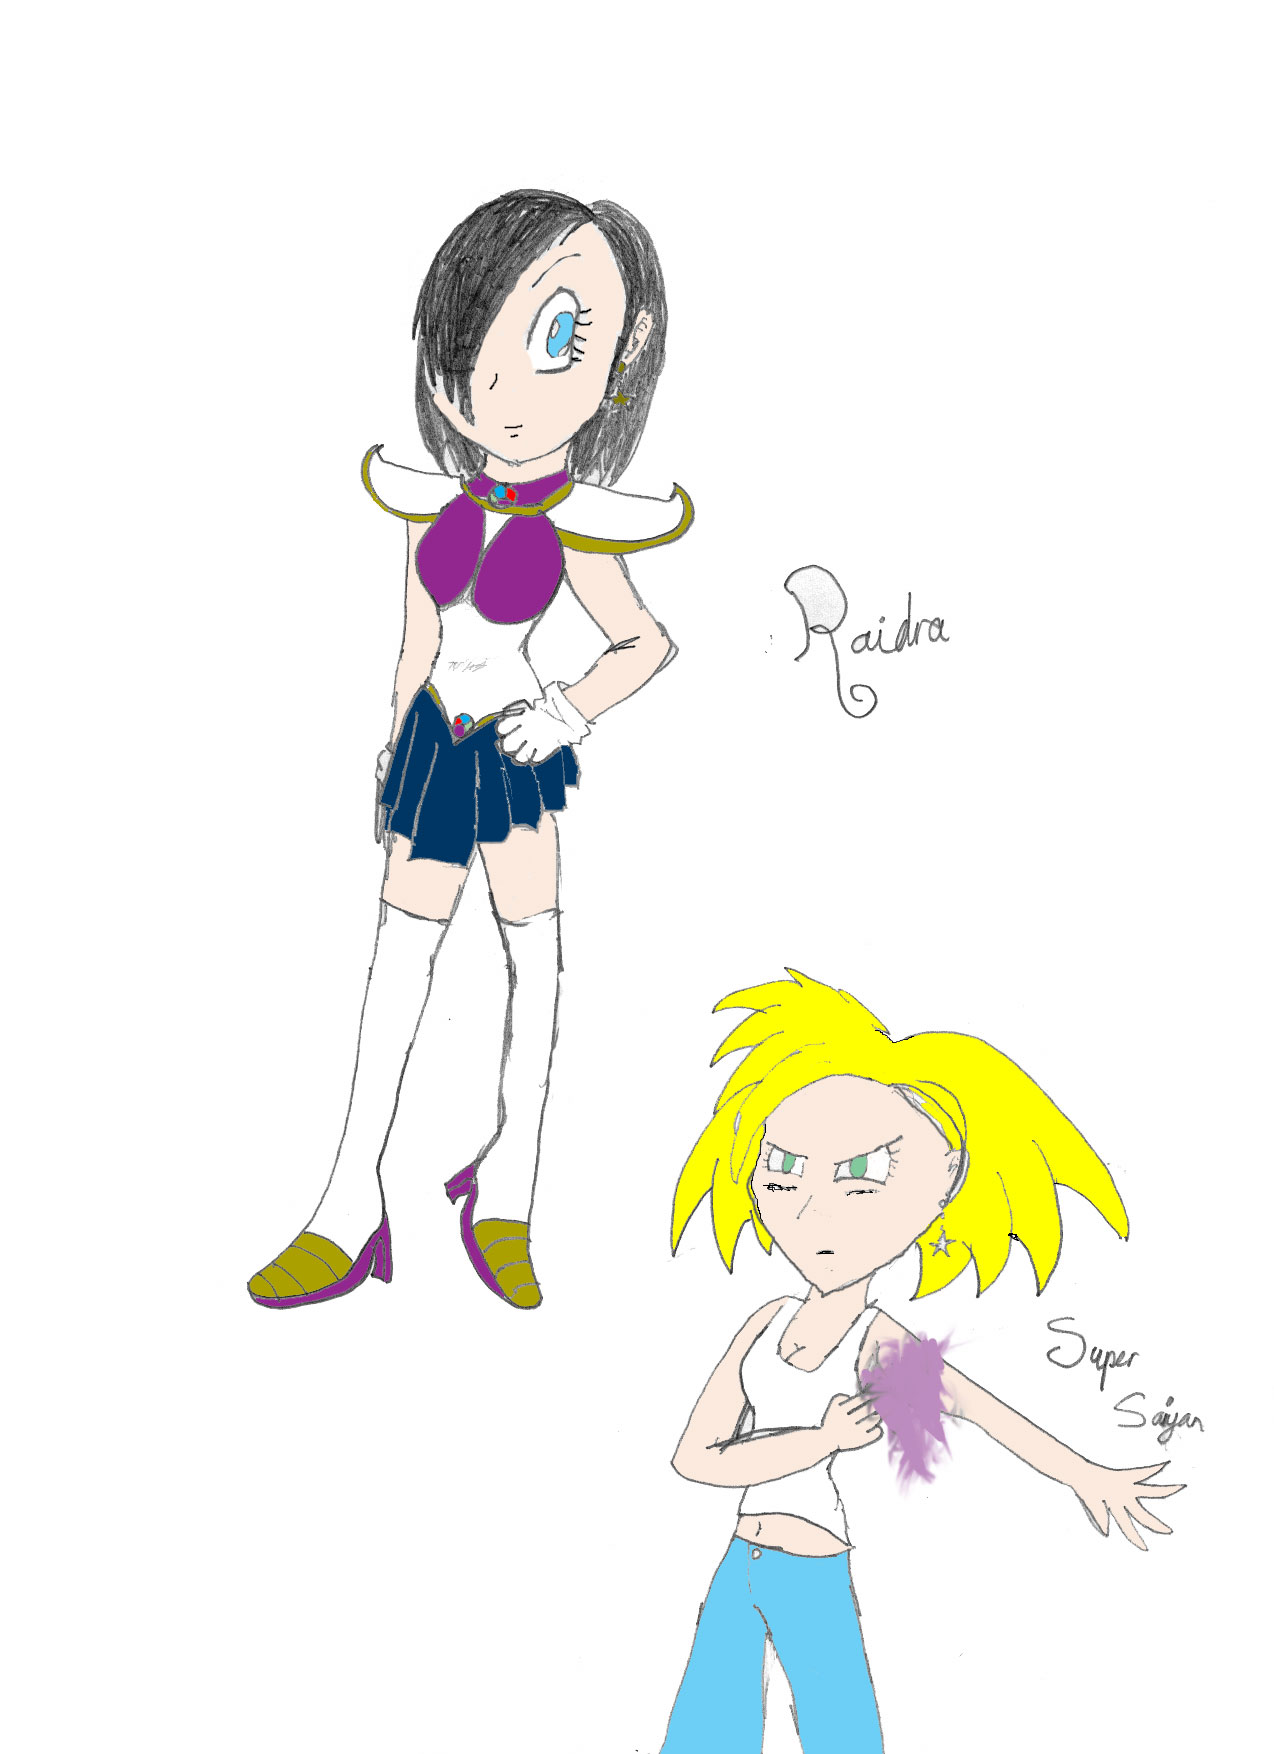 My fan character Raidra by Pikachu_Girl